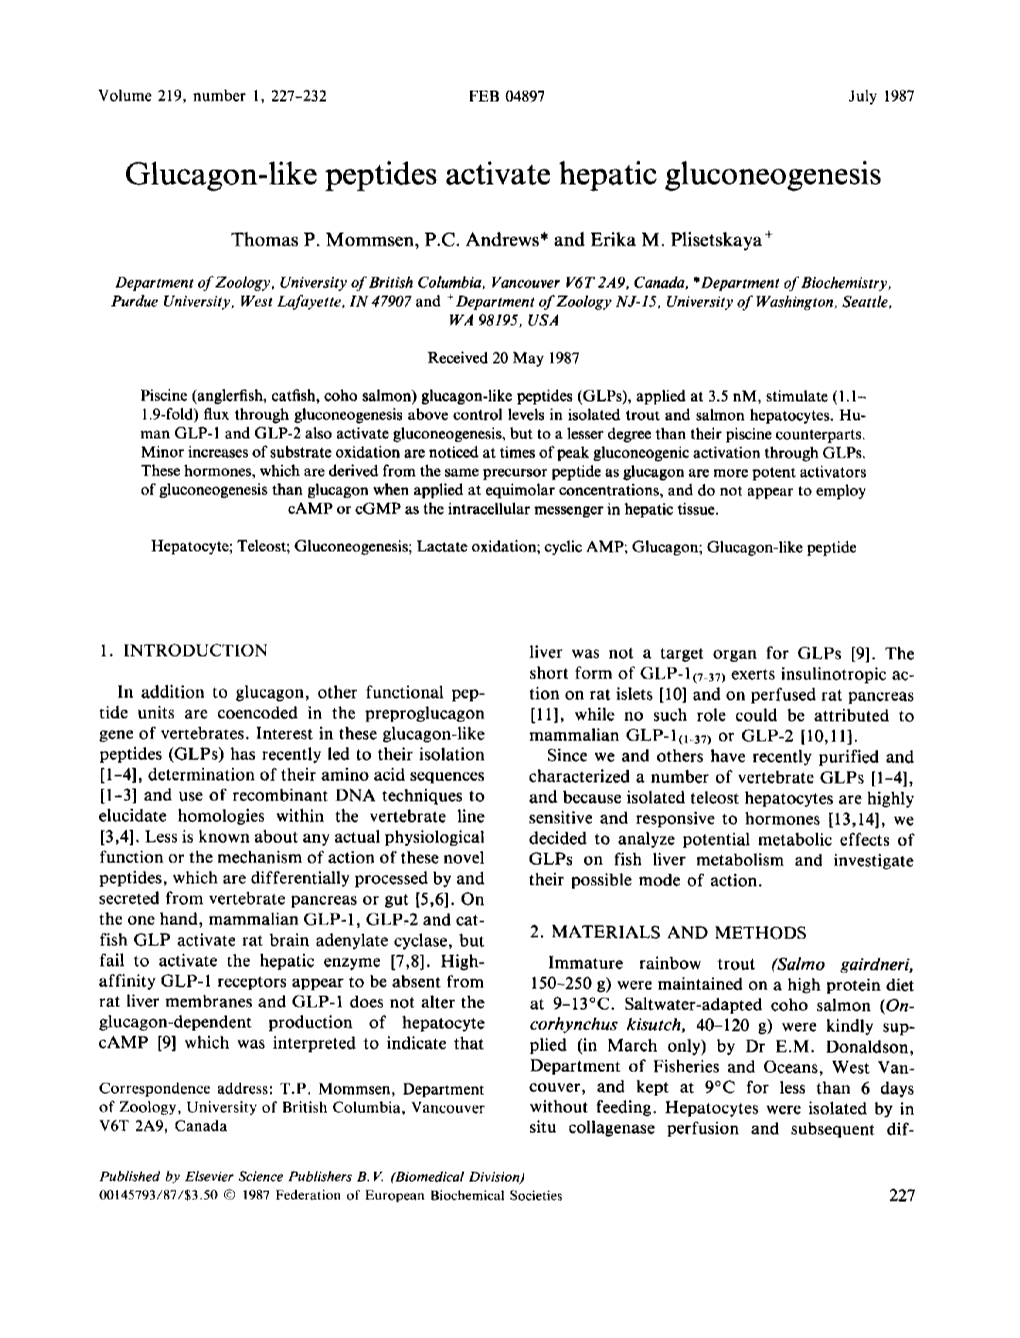 Glucagon-Like Peptides Activate Hepatic Gluconeogenesis